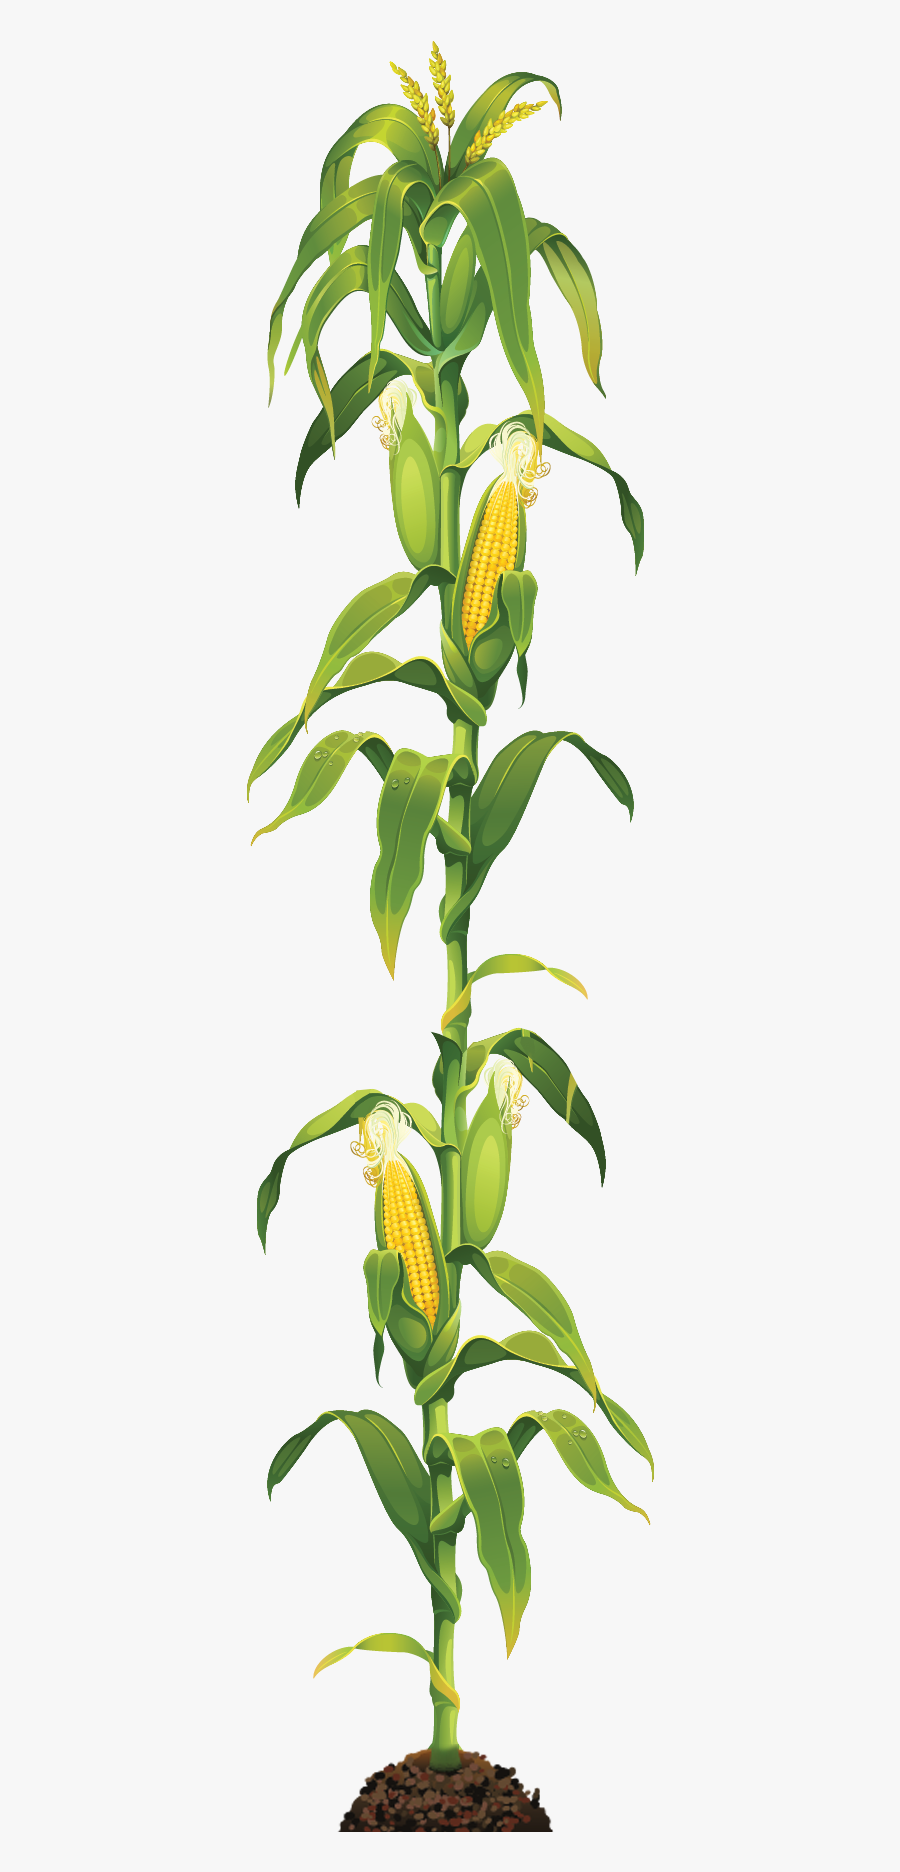 Corn On The Cob Maize Caramel Corn Clip Art - Transparent Corn Stalk, Transparent Clipart